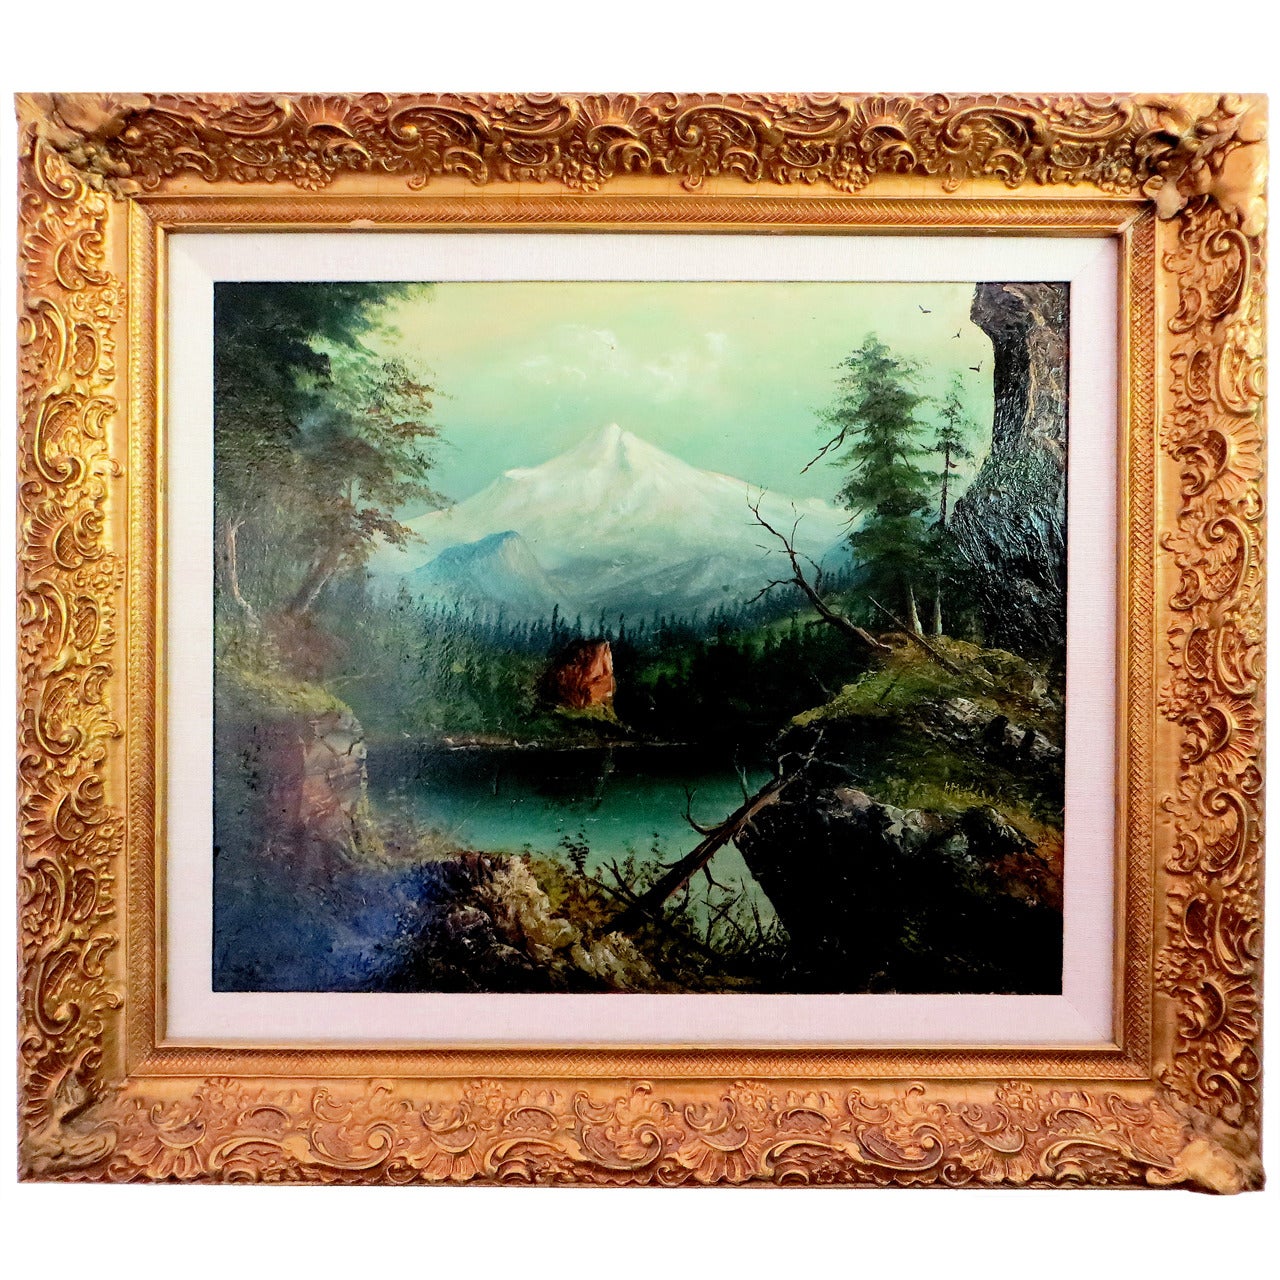 Oil Painting on Board of "Mount Hood" by R. Jones, circa 1907